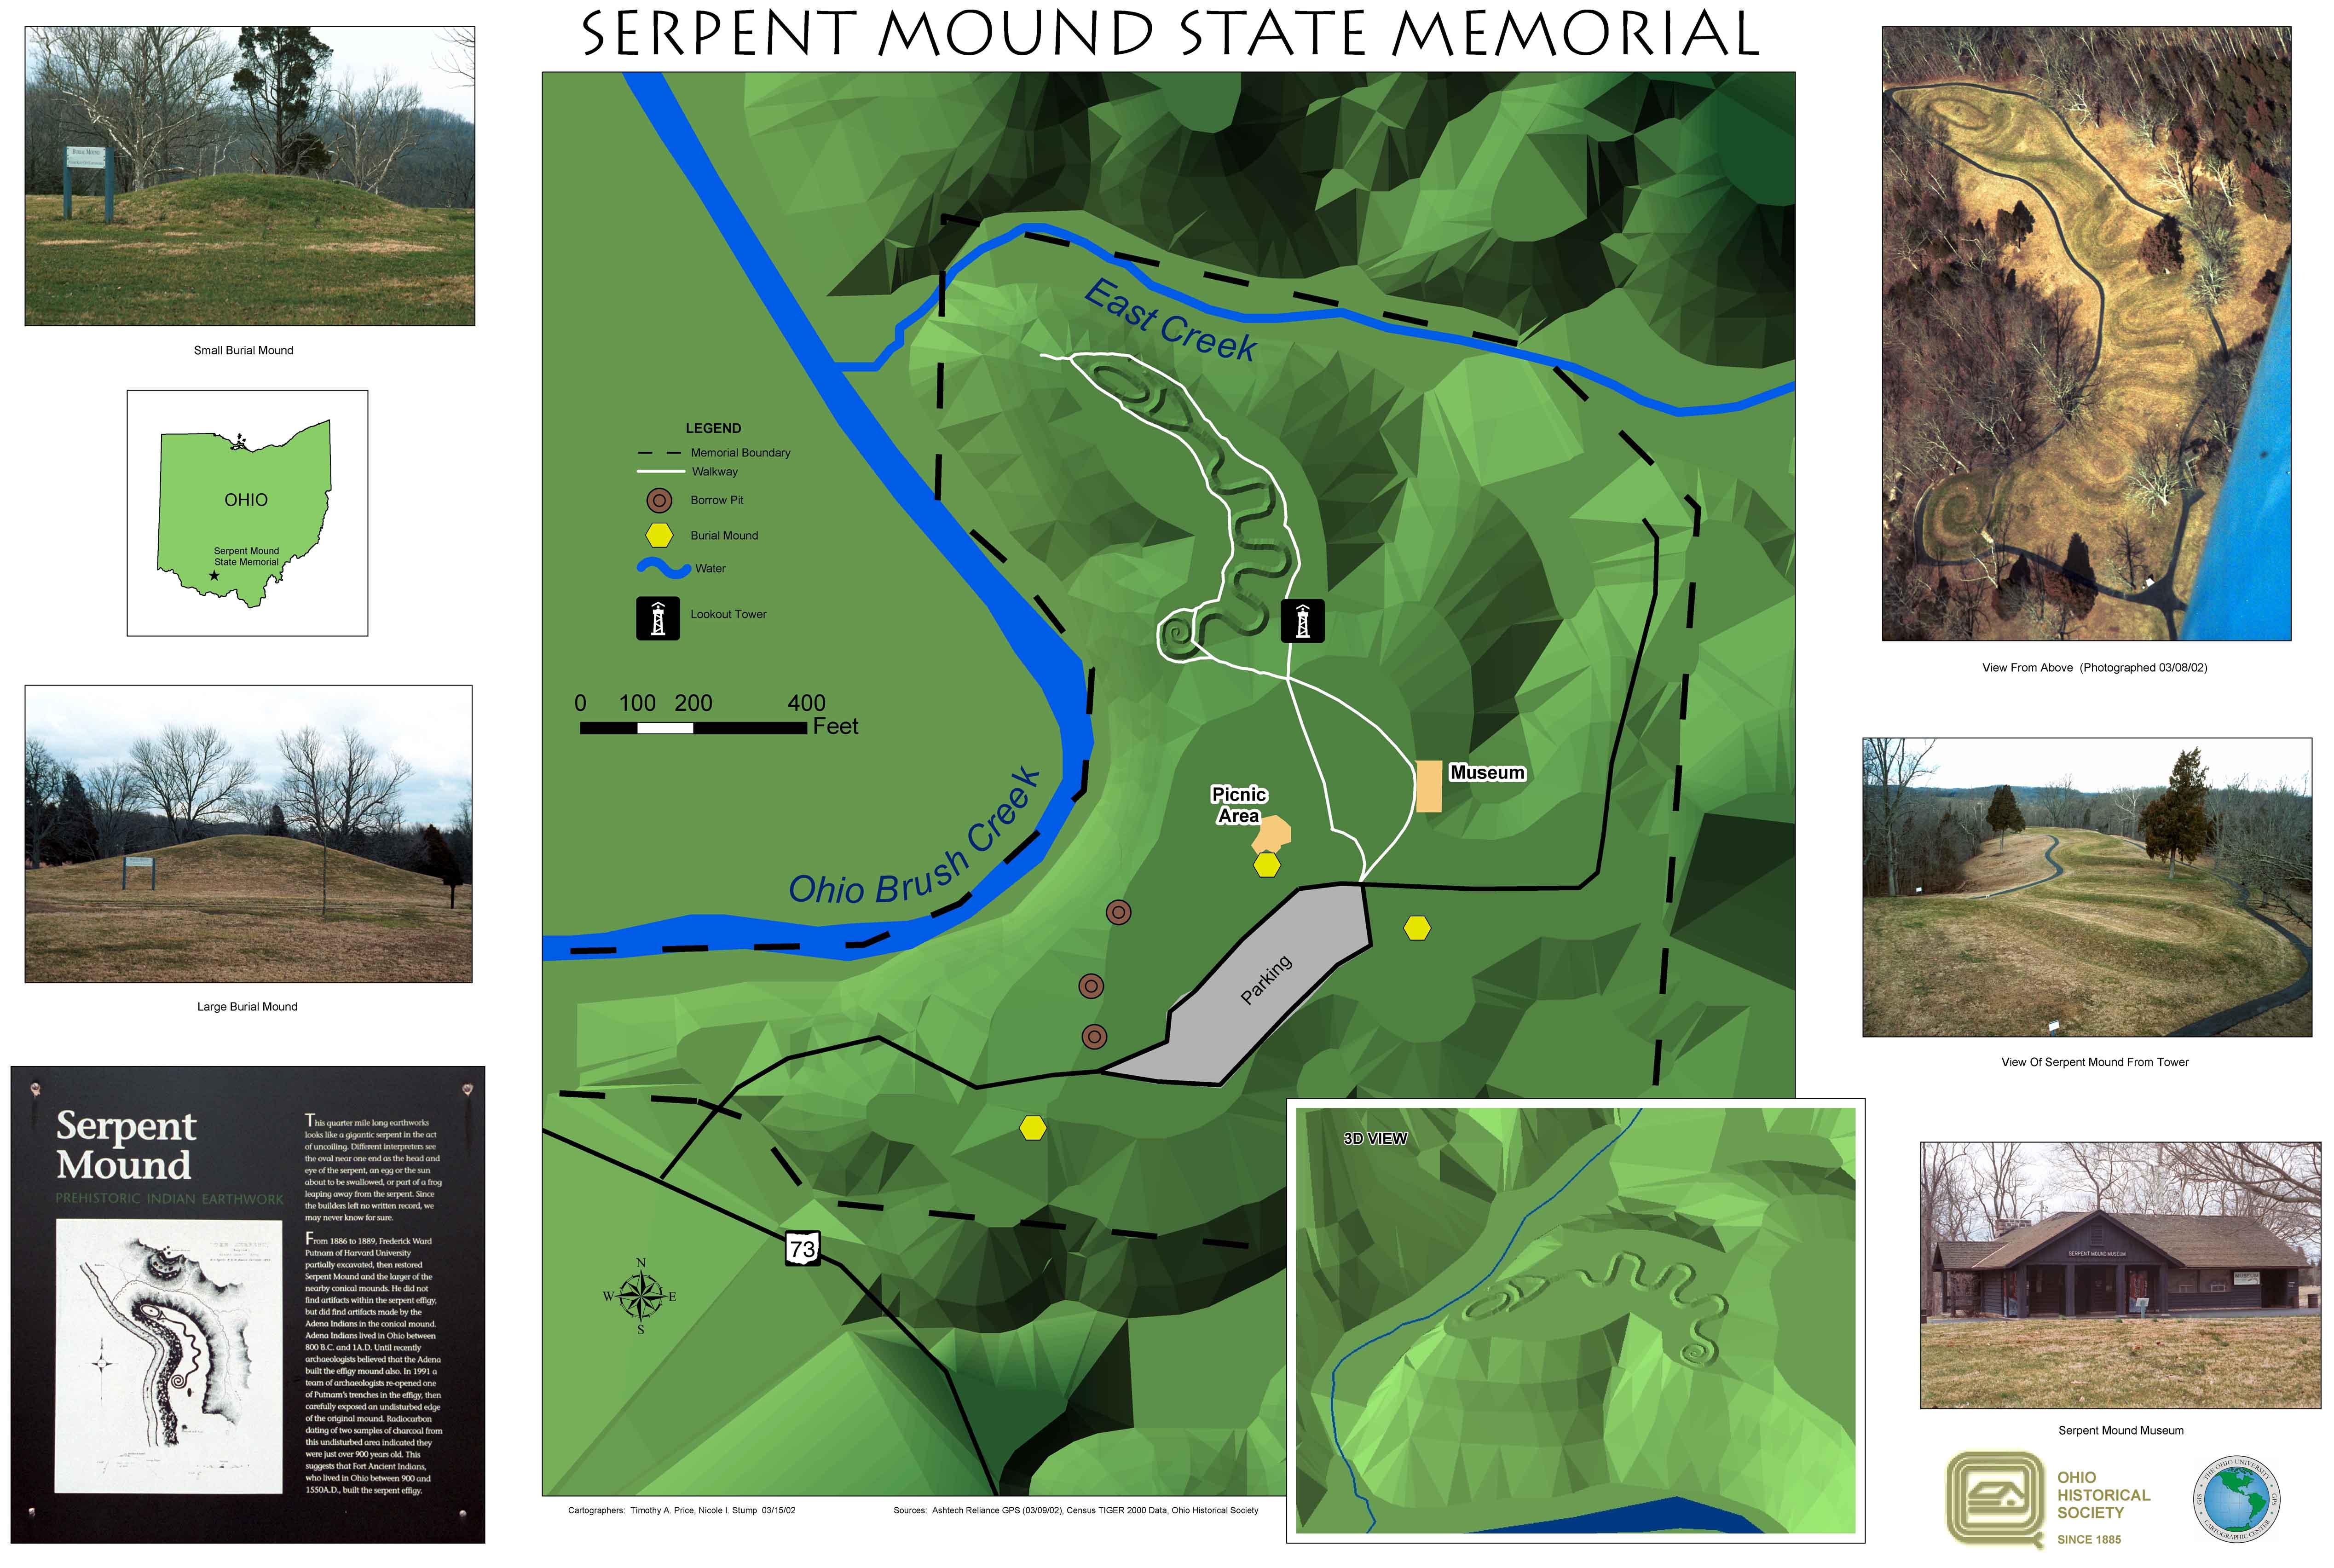 Worms - Serpent Mound Ohio 2